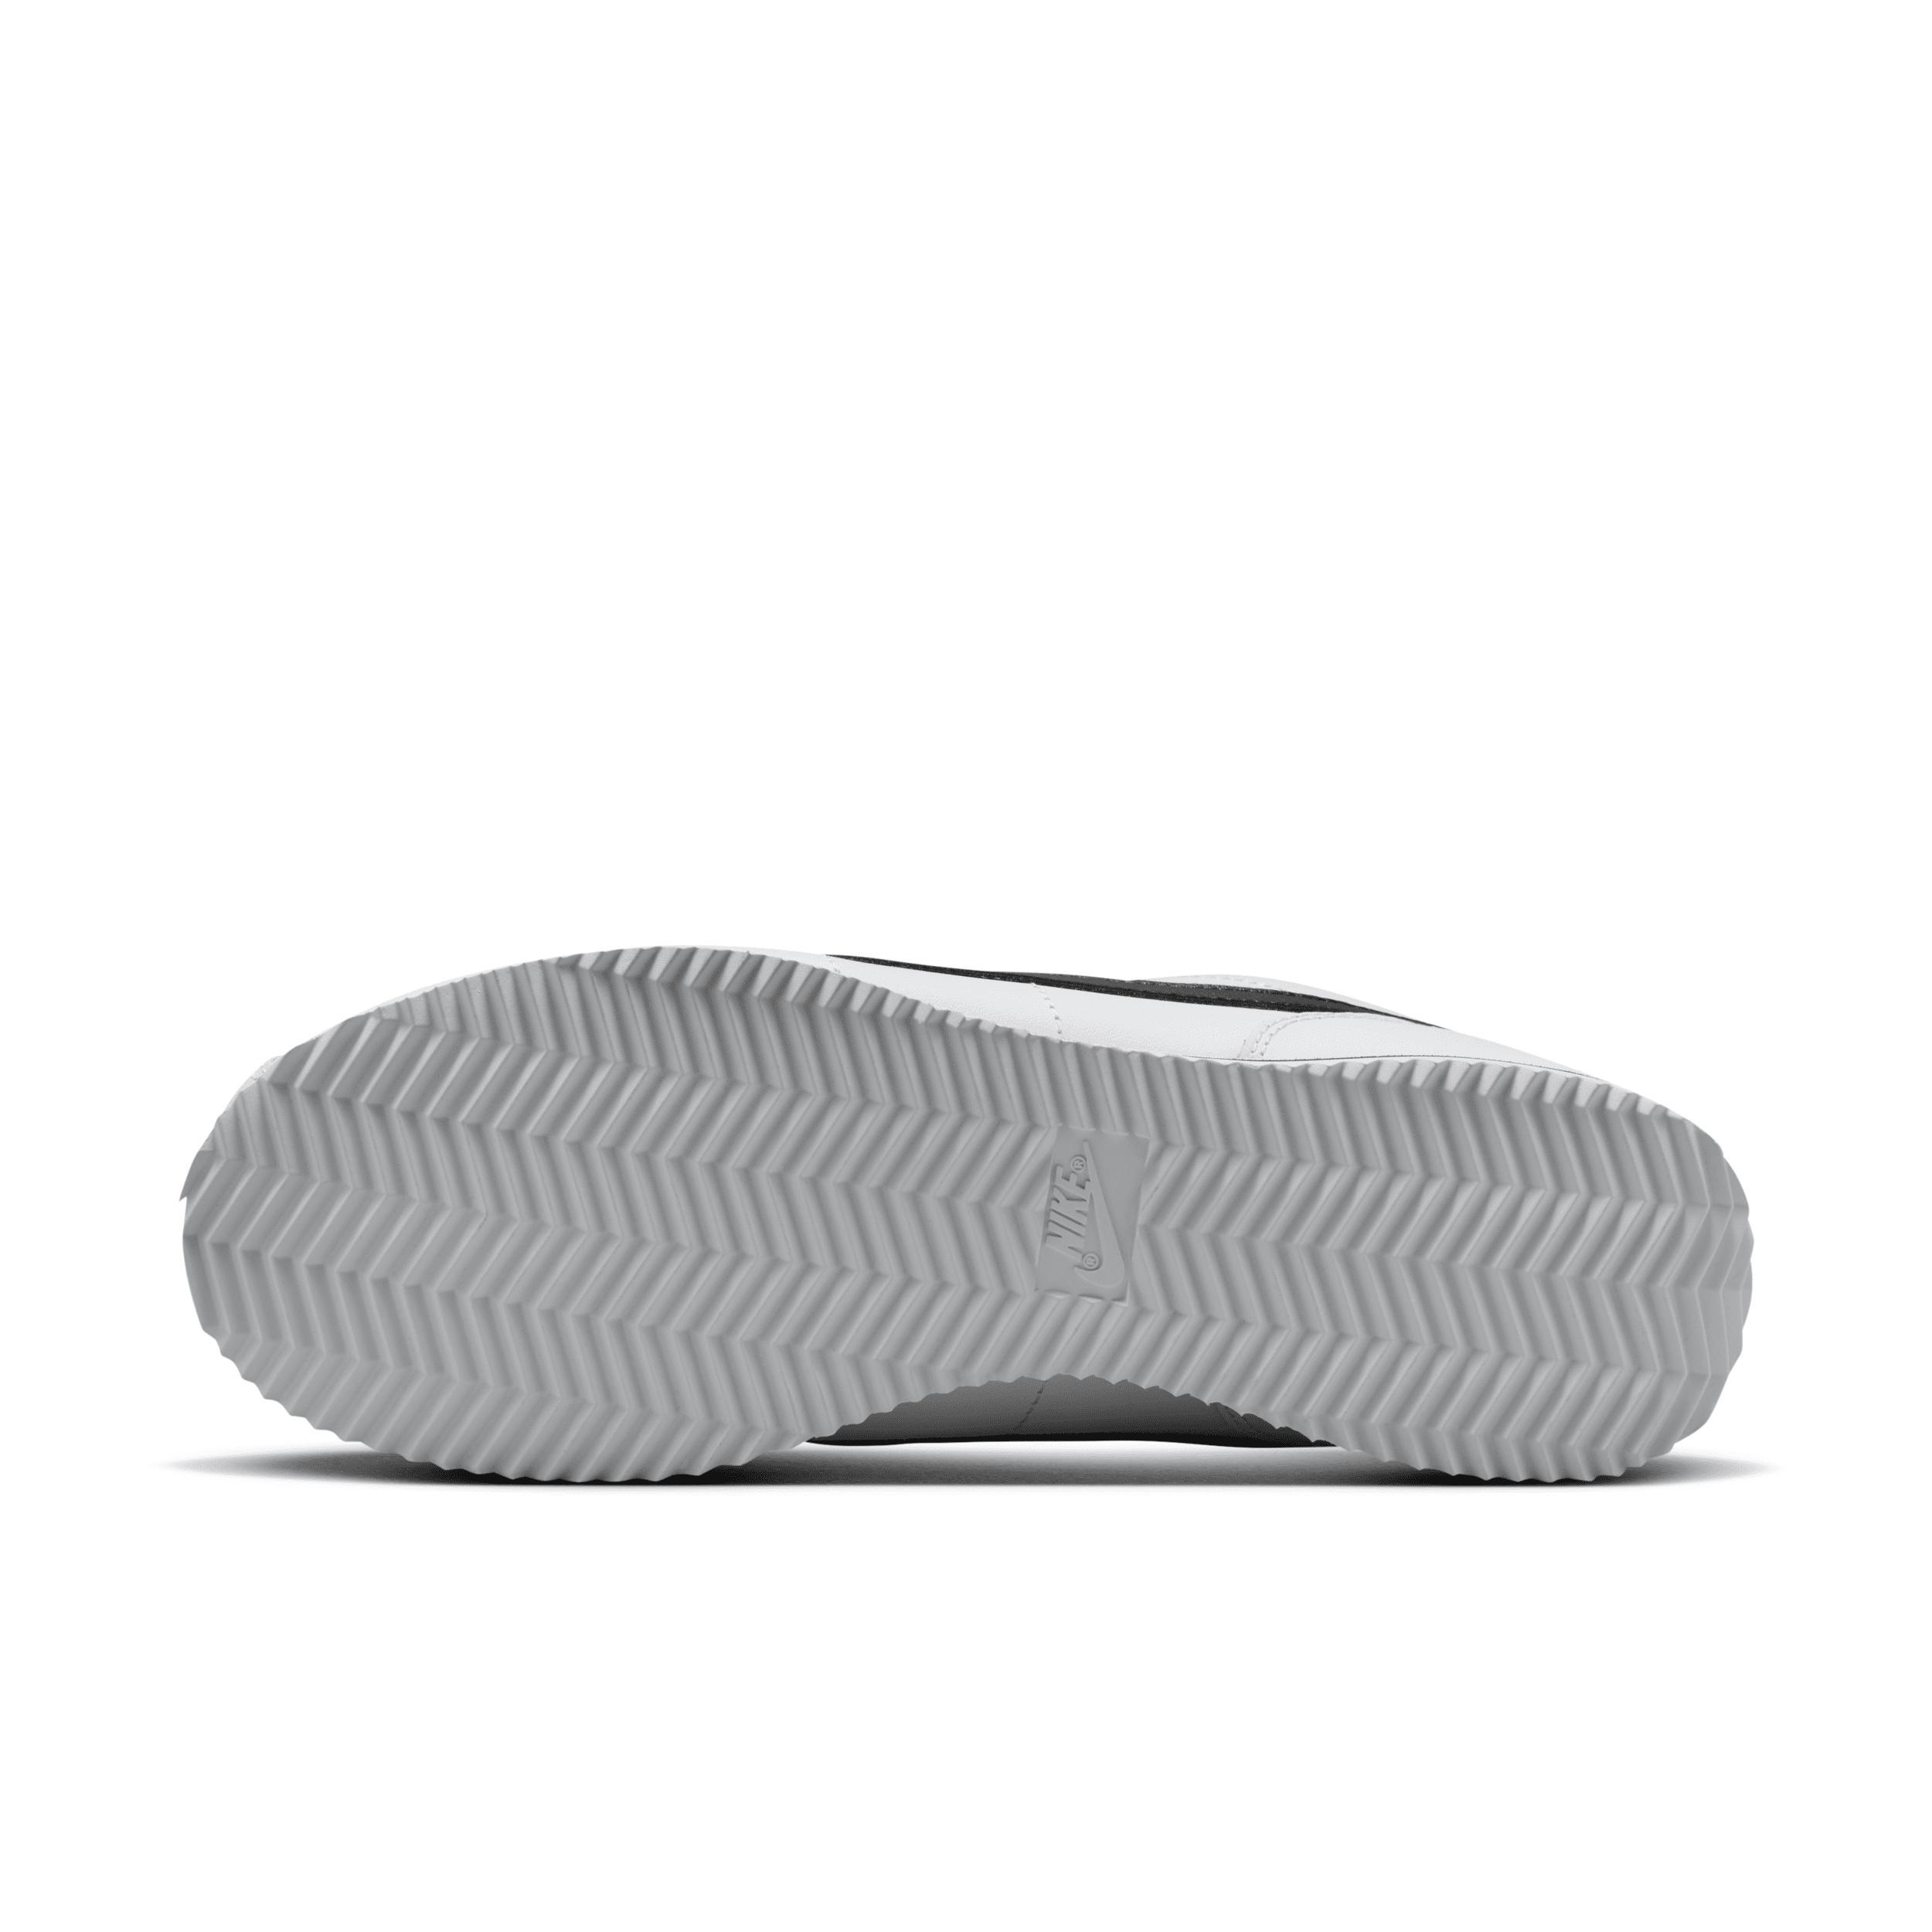 Nike Cortez Leather Shoes Product Image